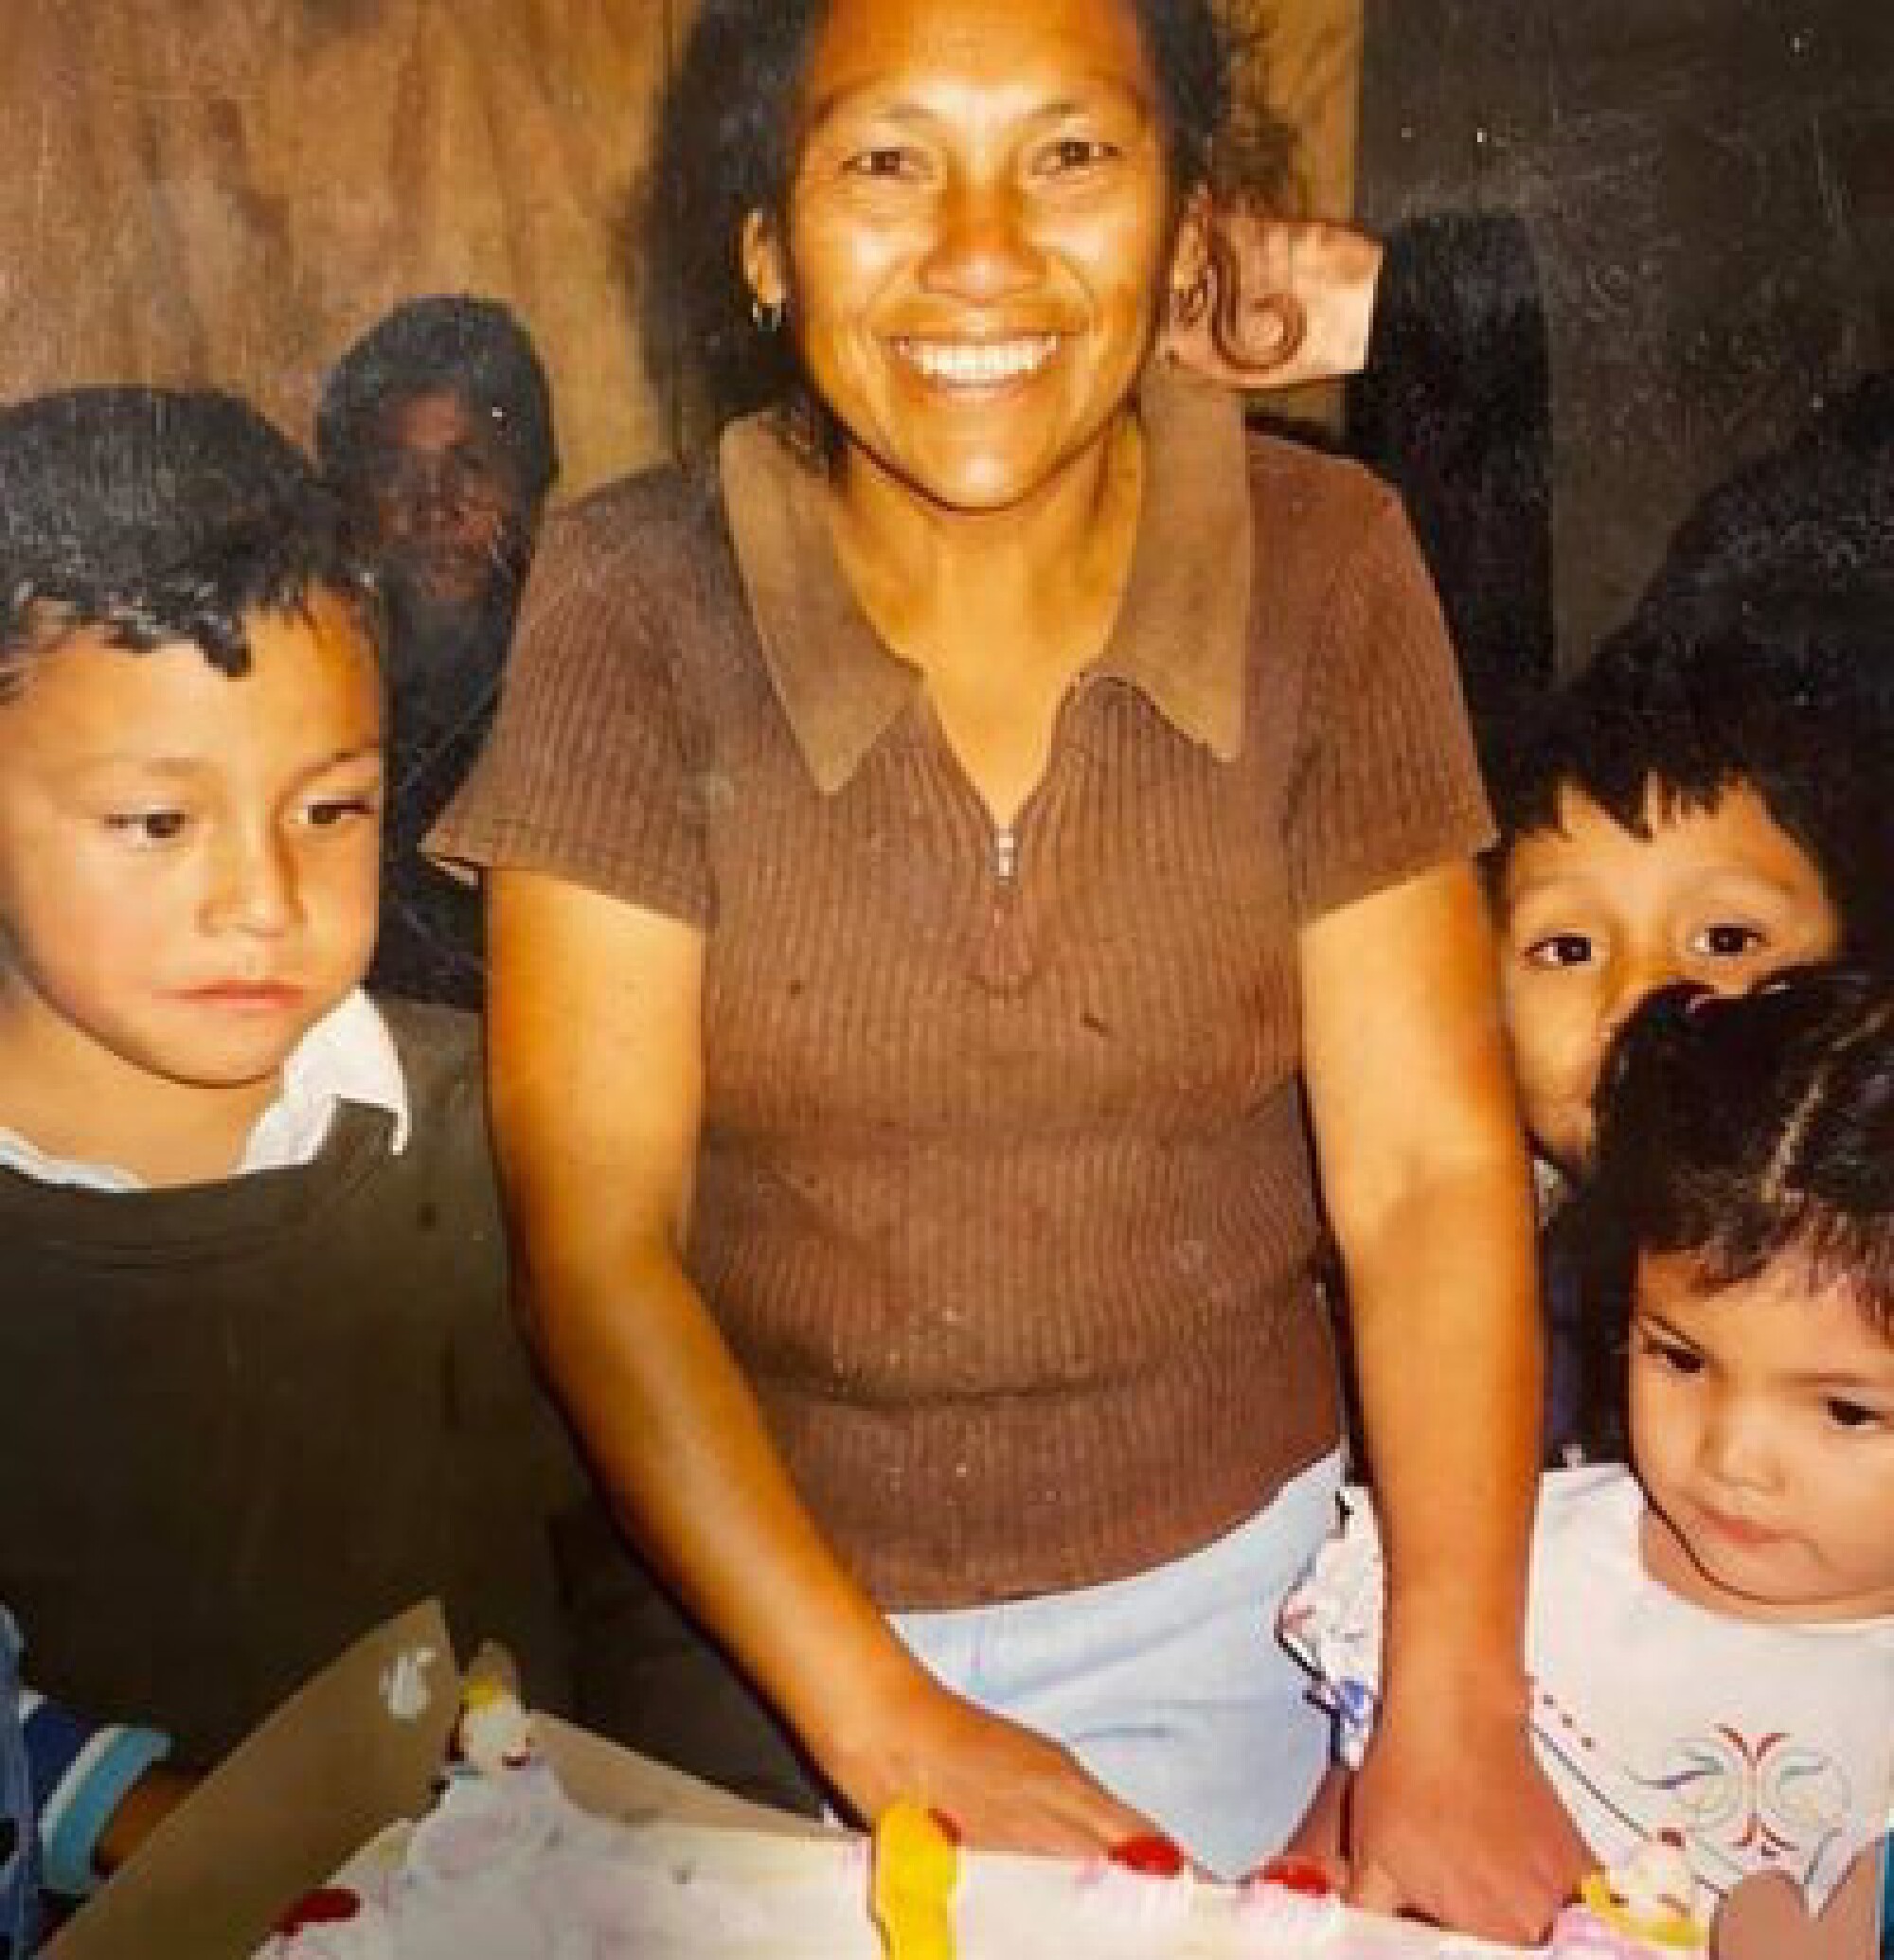 Angela Rangel and her family celebrate a birthday.